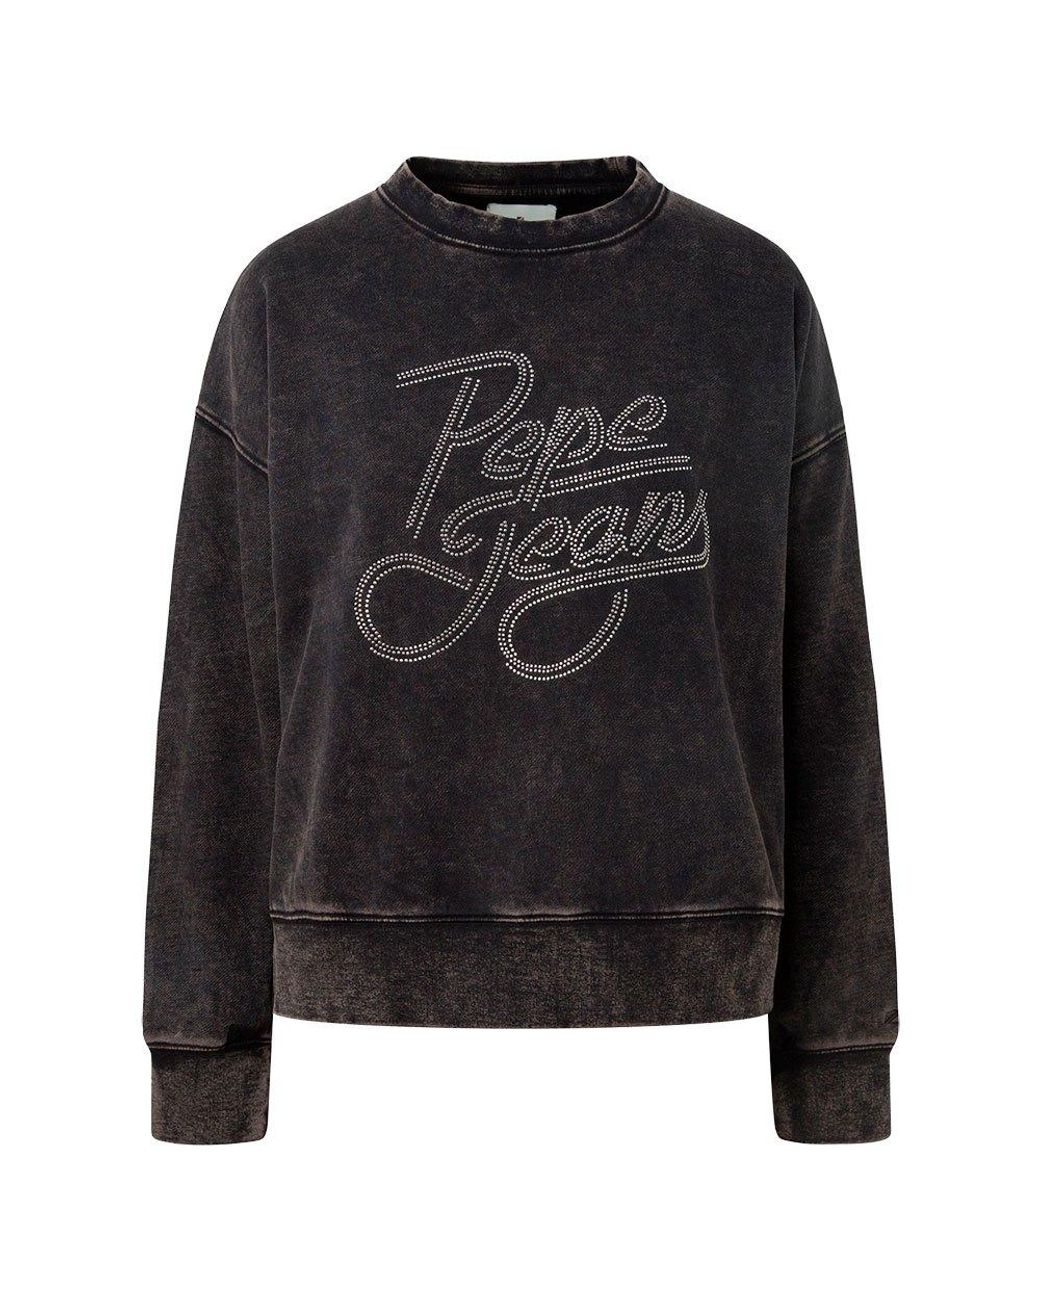 Pepe Jeans Connie Sweatshirt in Black | Lyst